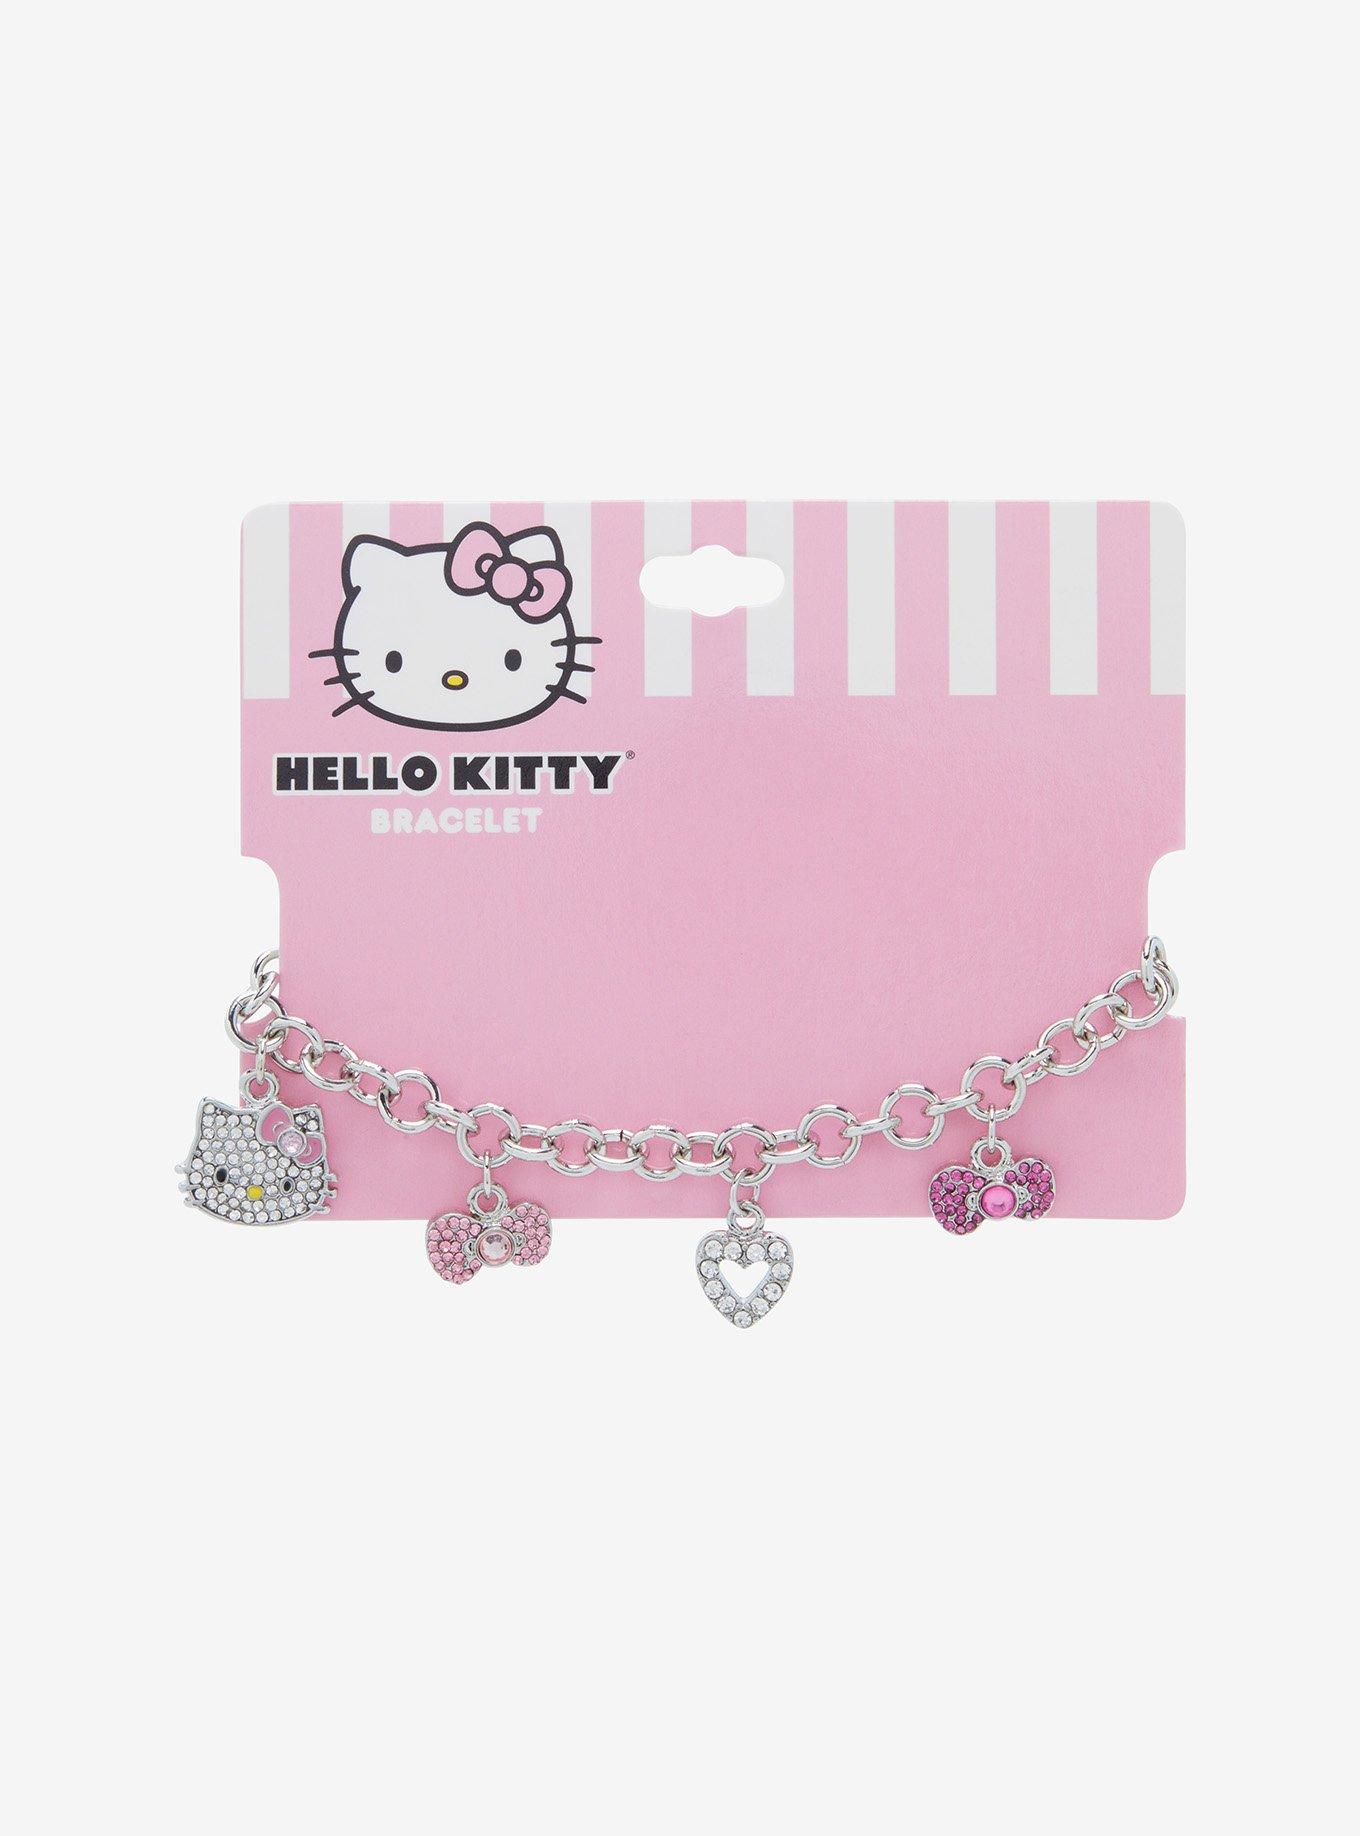 NEW My Hero Academia X Hello Kitty Friends 6 Bracelet Set Anime